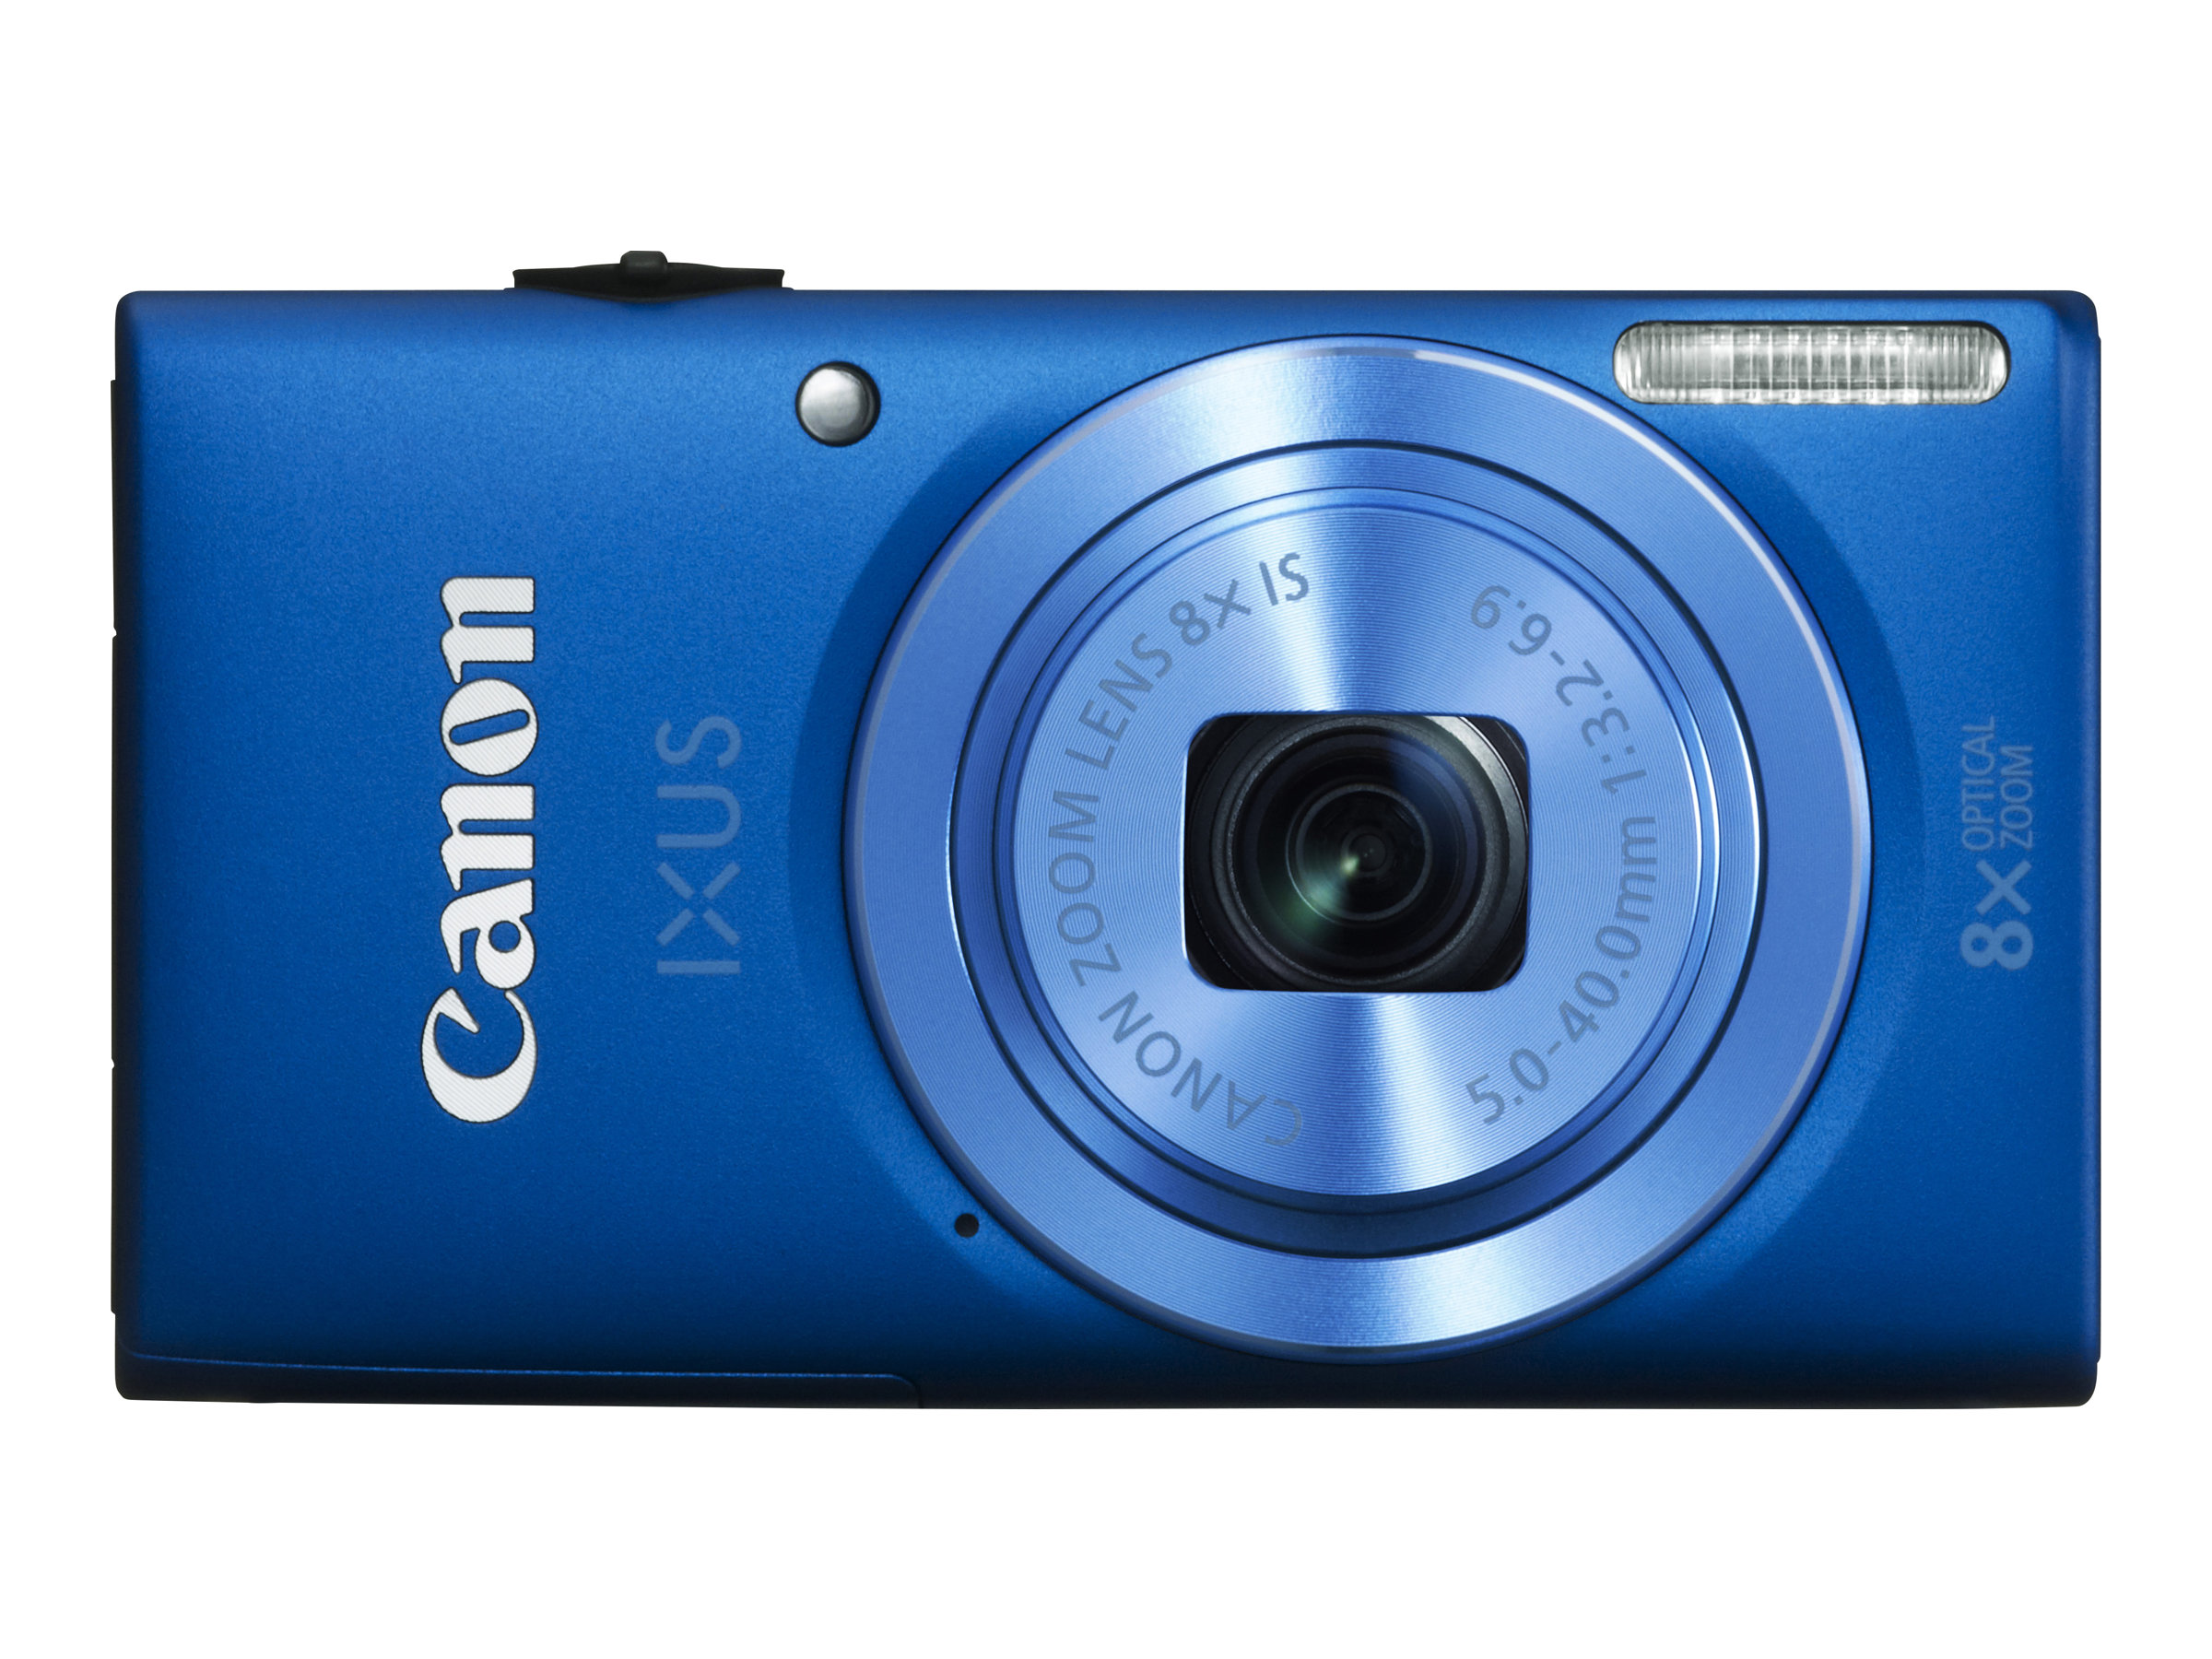 Canon PowerShot A2500 Digital Camera (Silver) 8254B001 B&H Photo